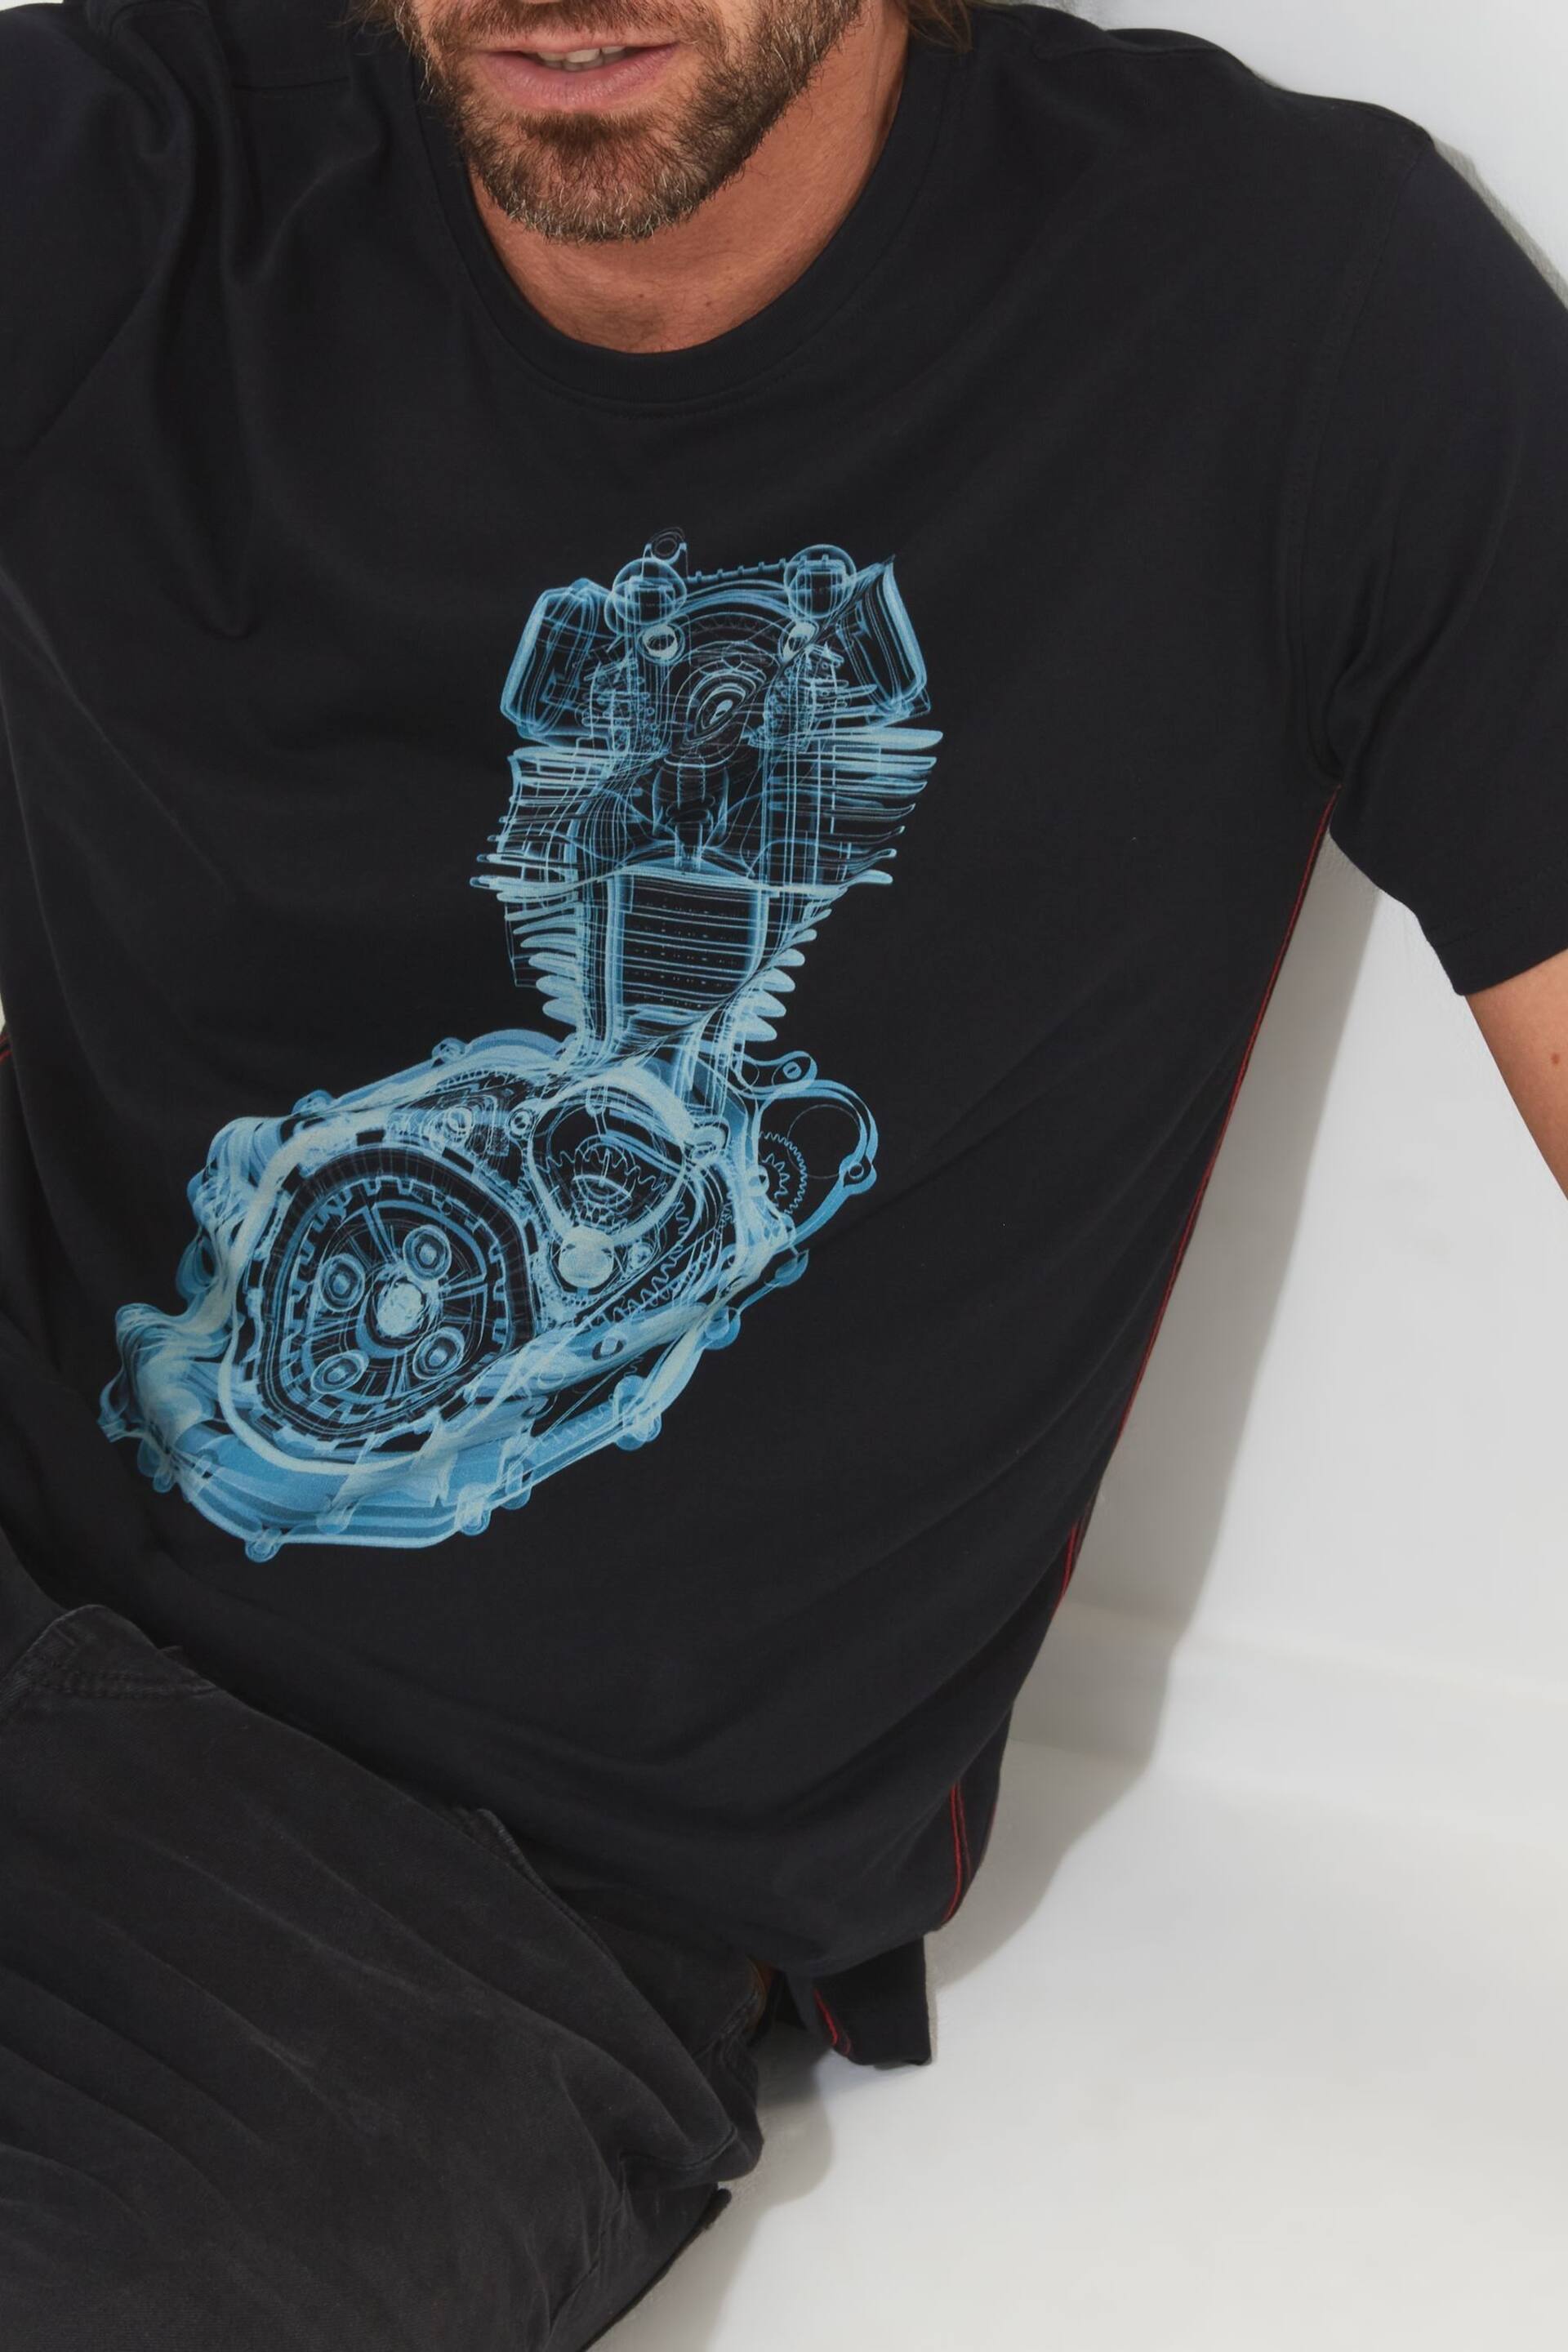 Joe Browns Black Engine Print Graphic T-Shirt - Image 4 of 5